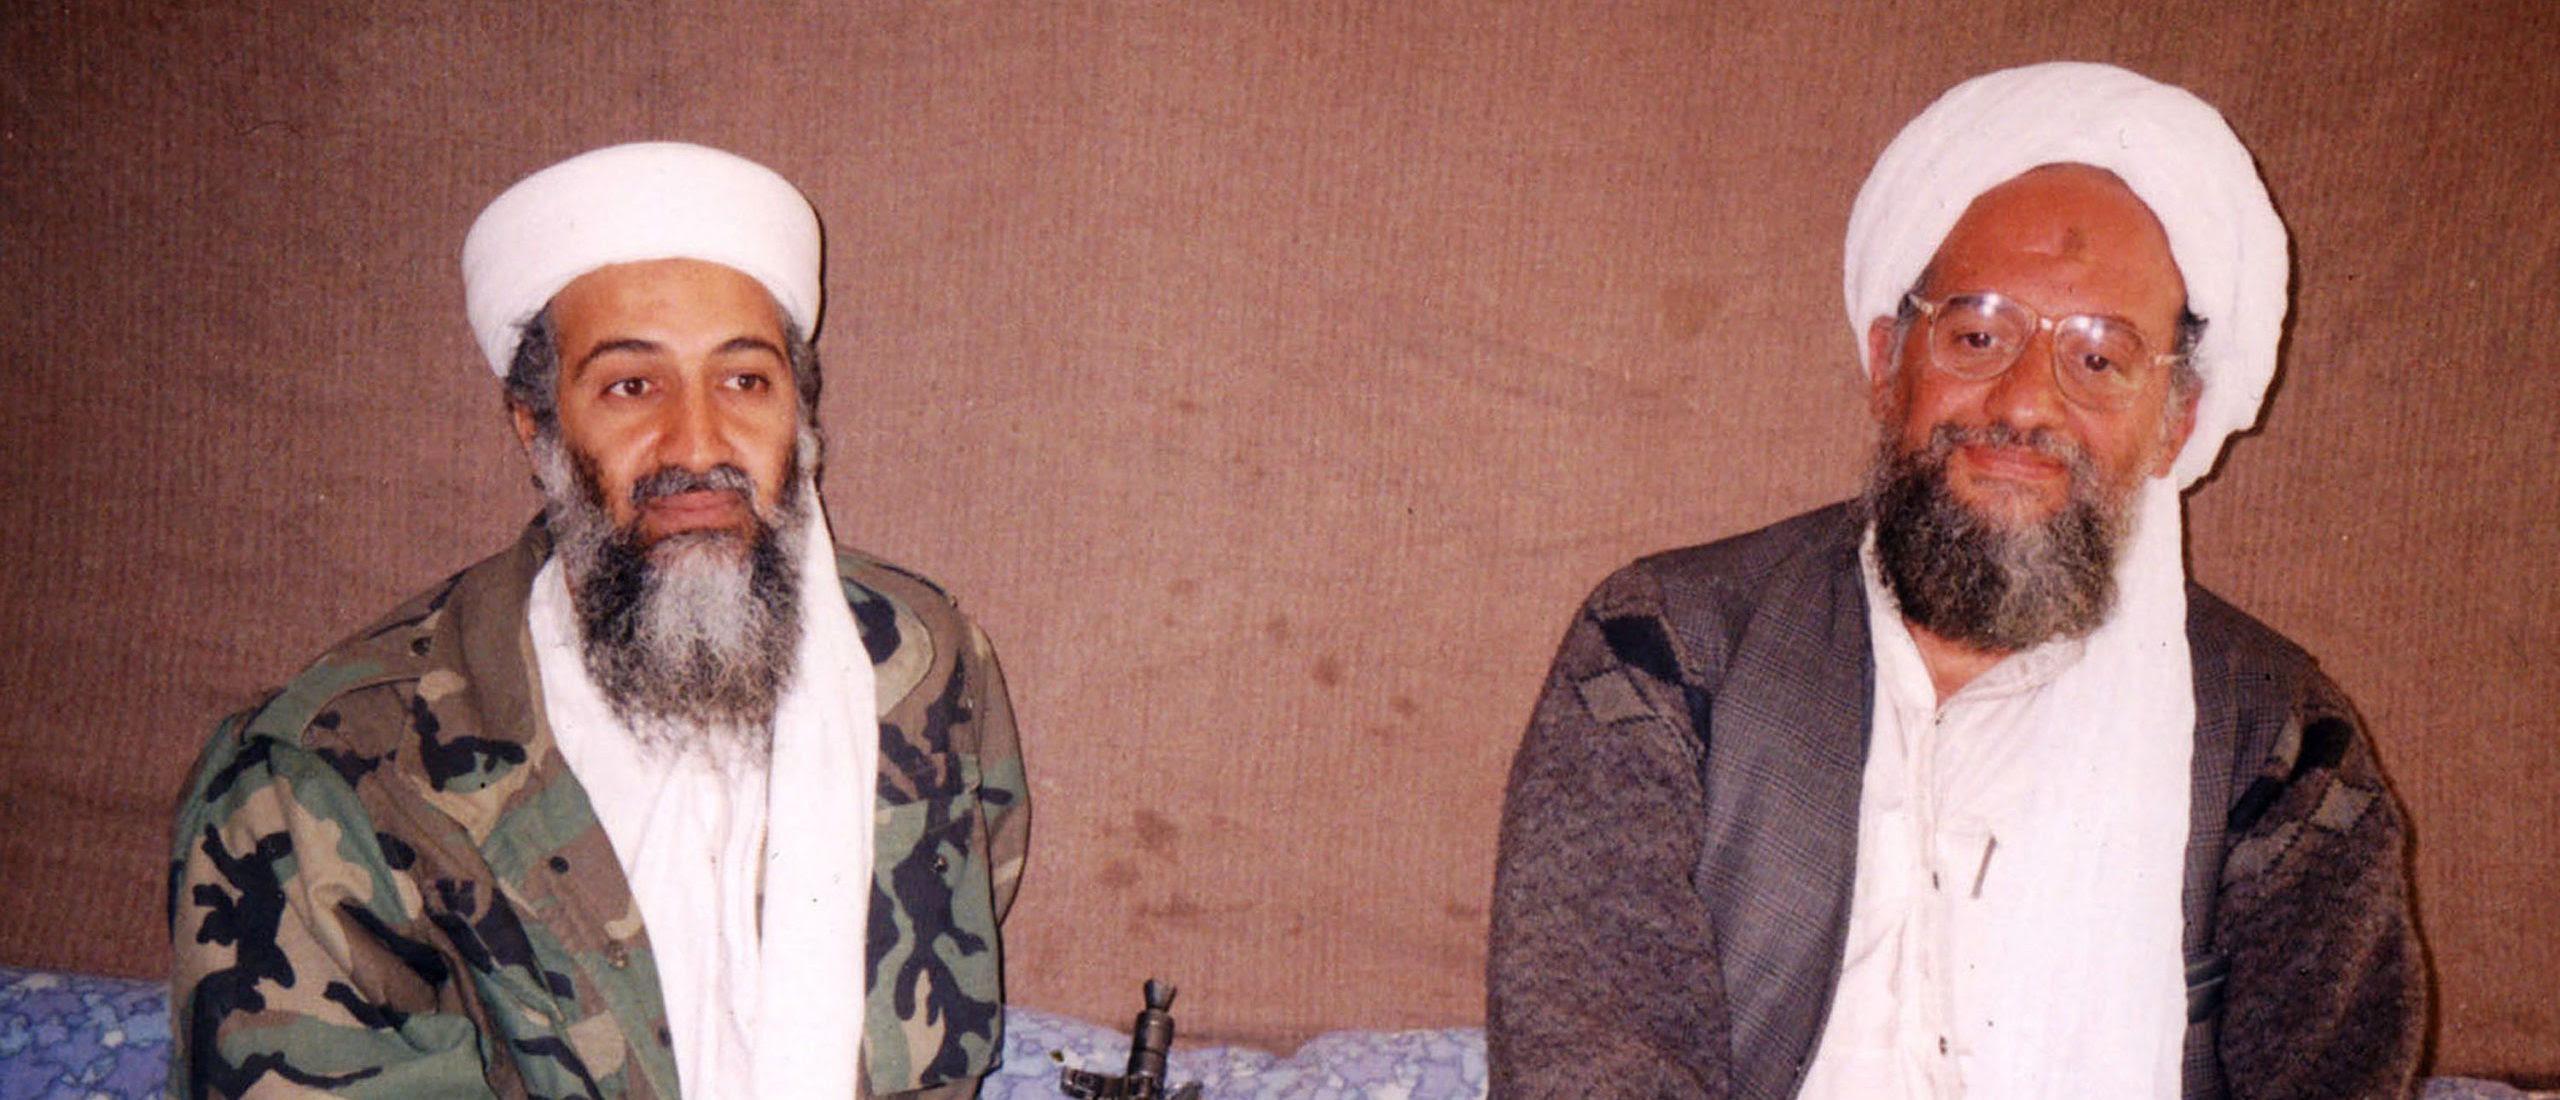 FARAHAT: Al-Qaida’s Radical Ideas Are Making A Comeback. Here’s Why